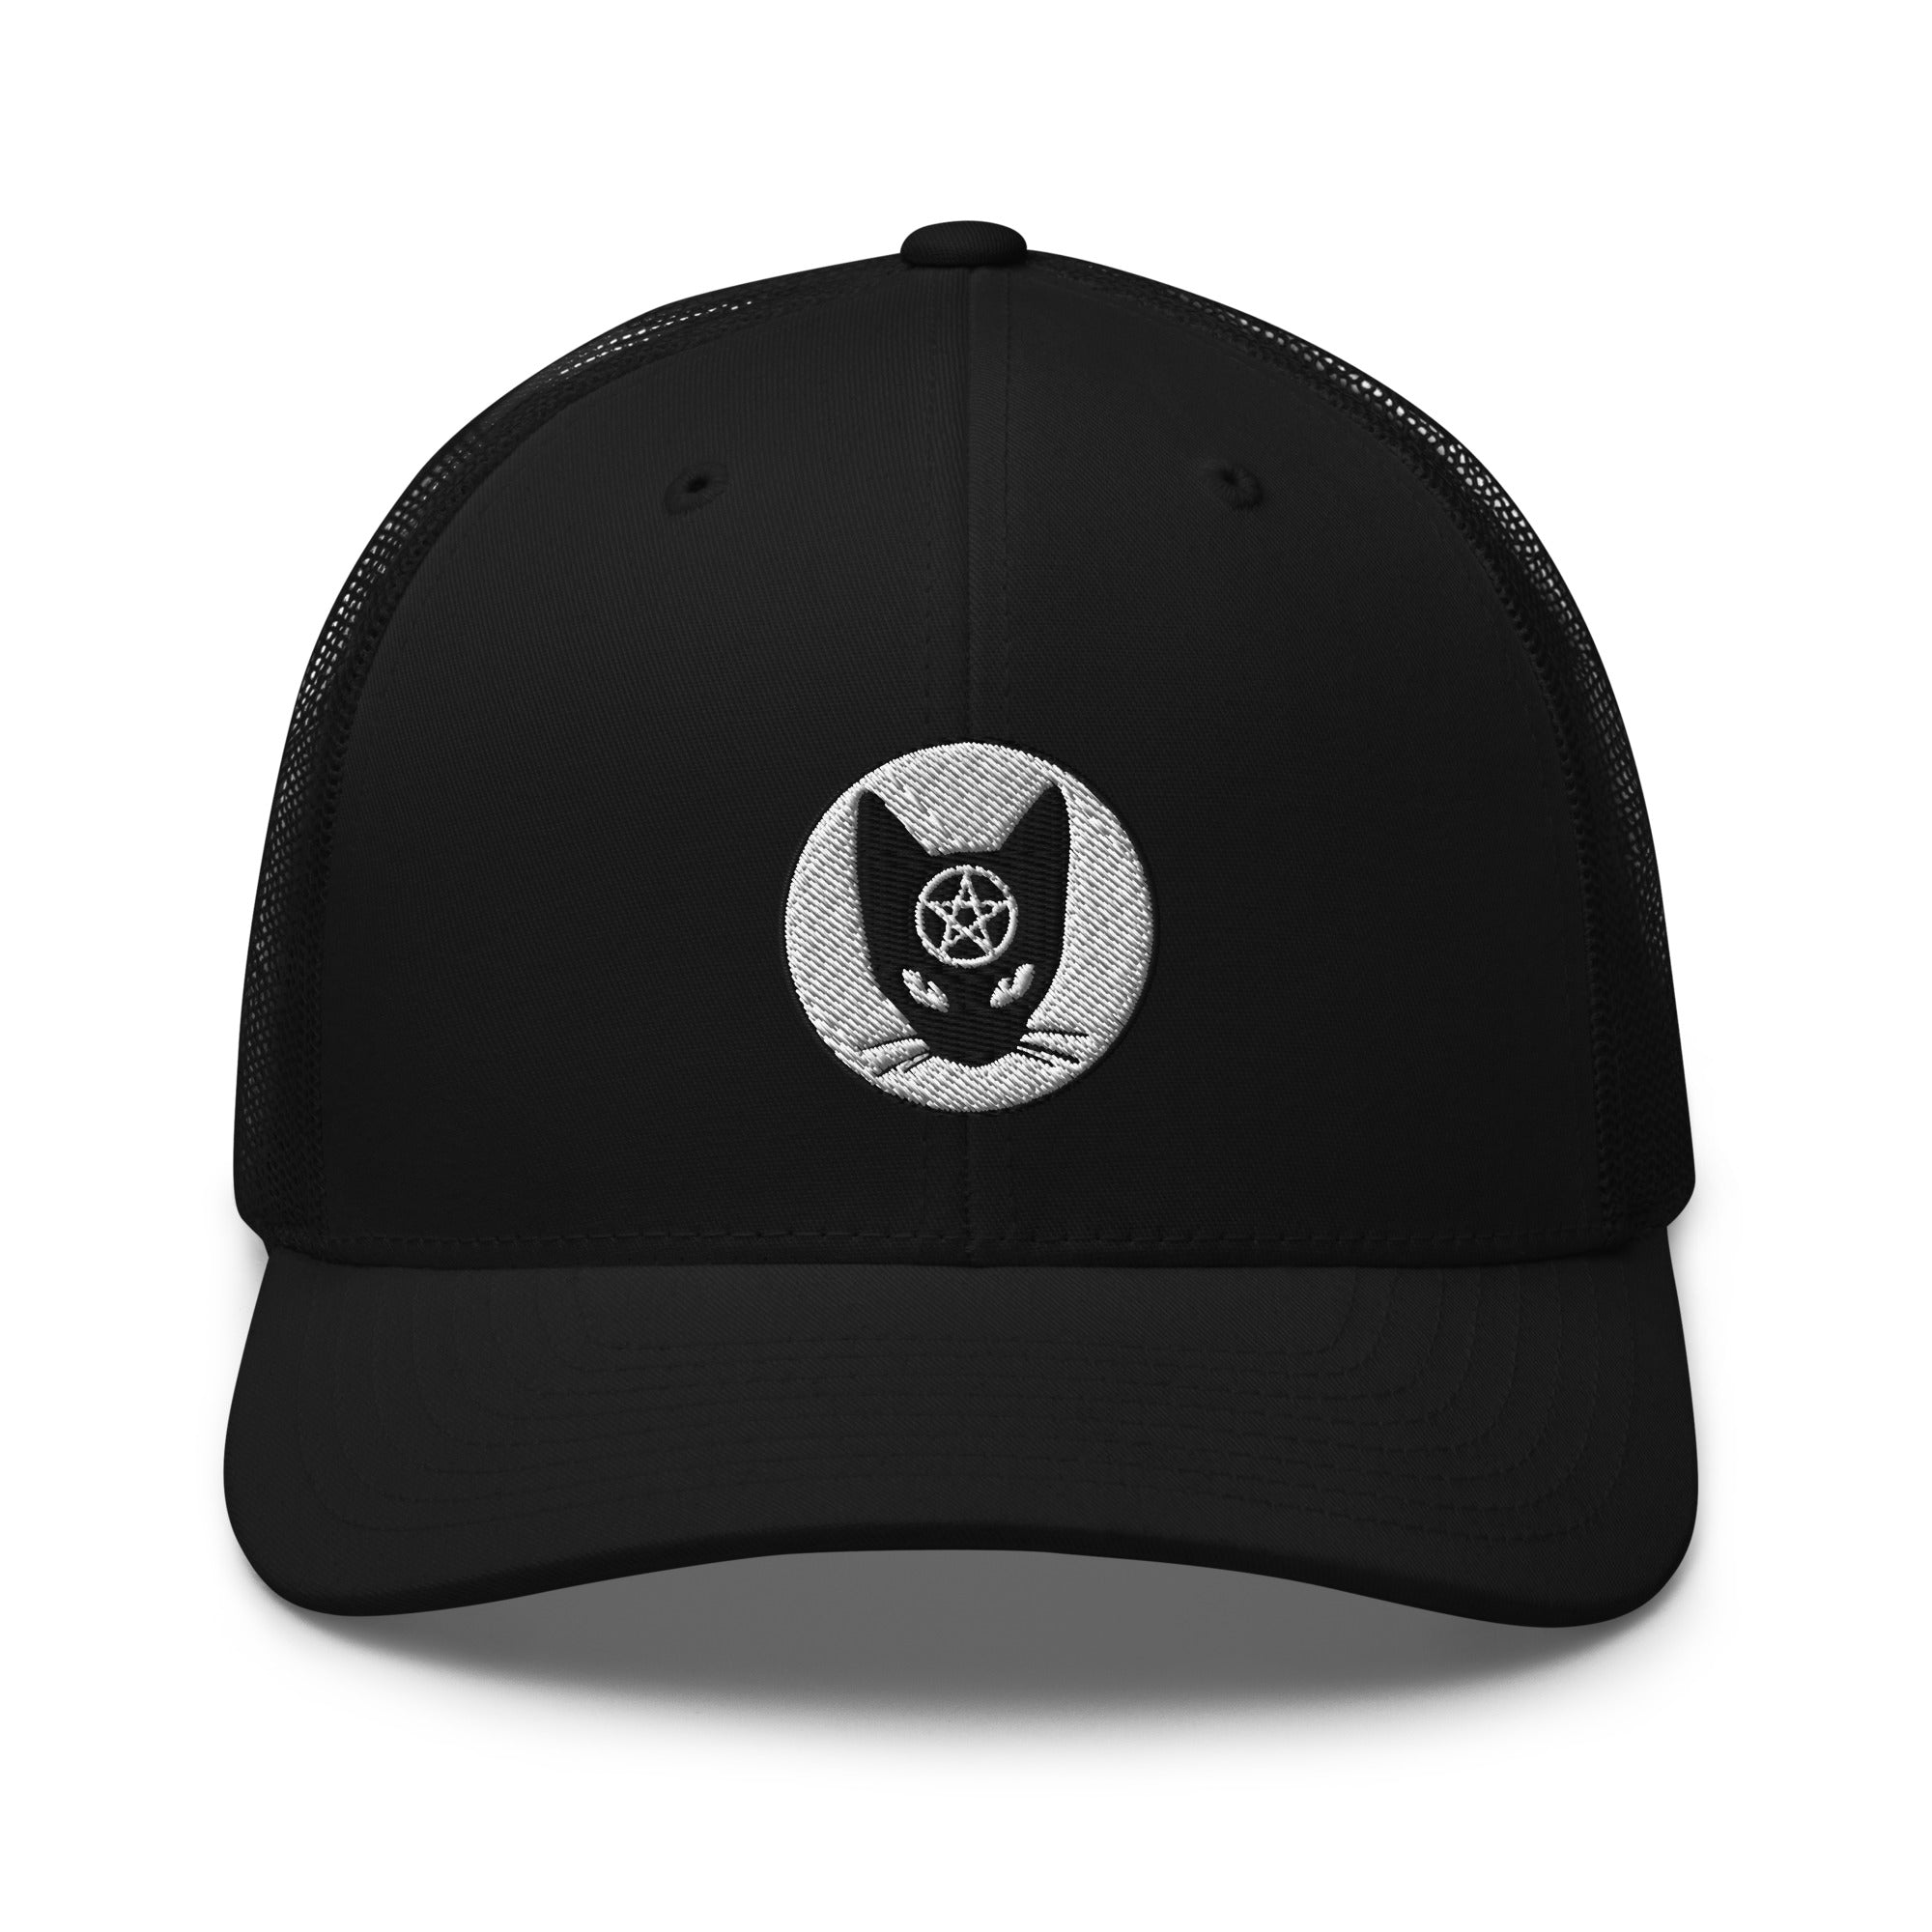 Black Cat Wiccan Pentagram Embroidered Retro Trucker Cap Snapback Hat